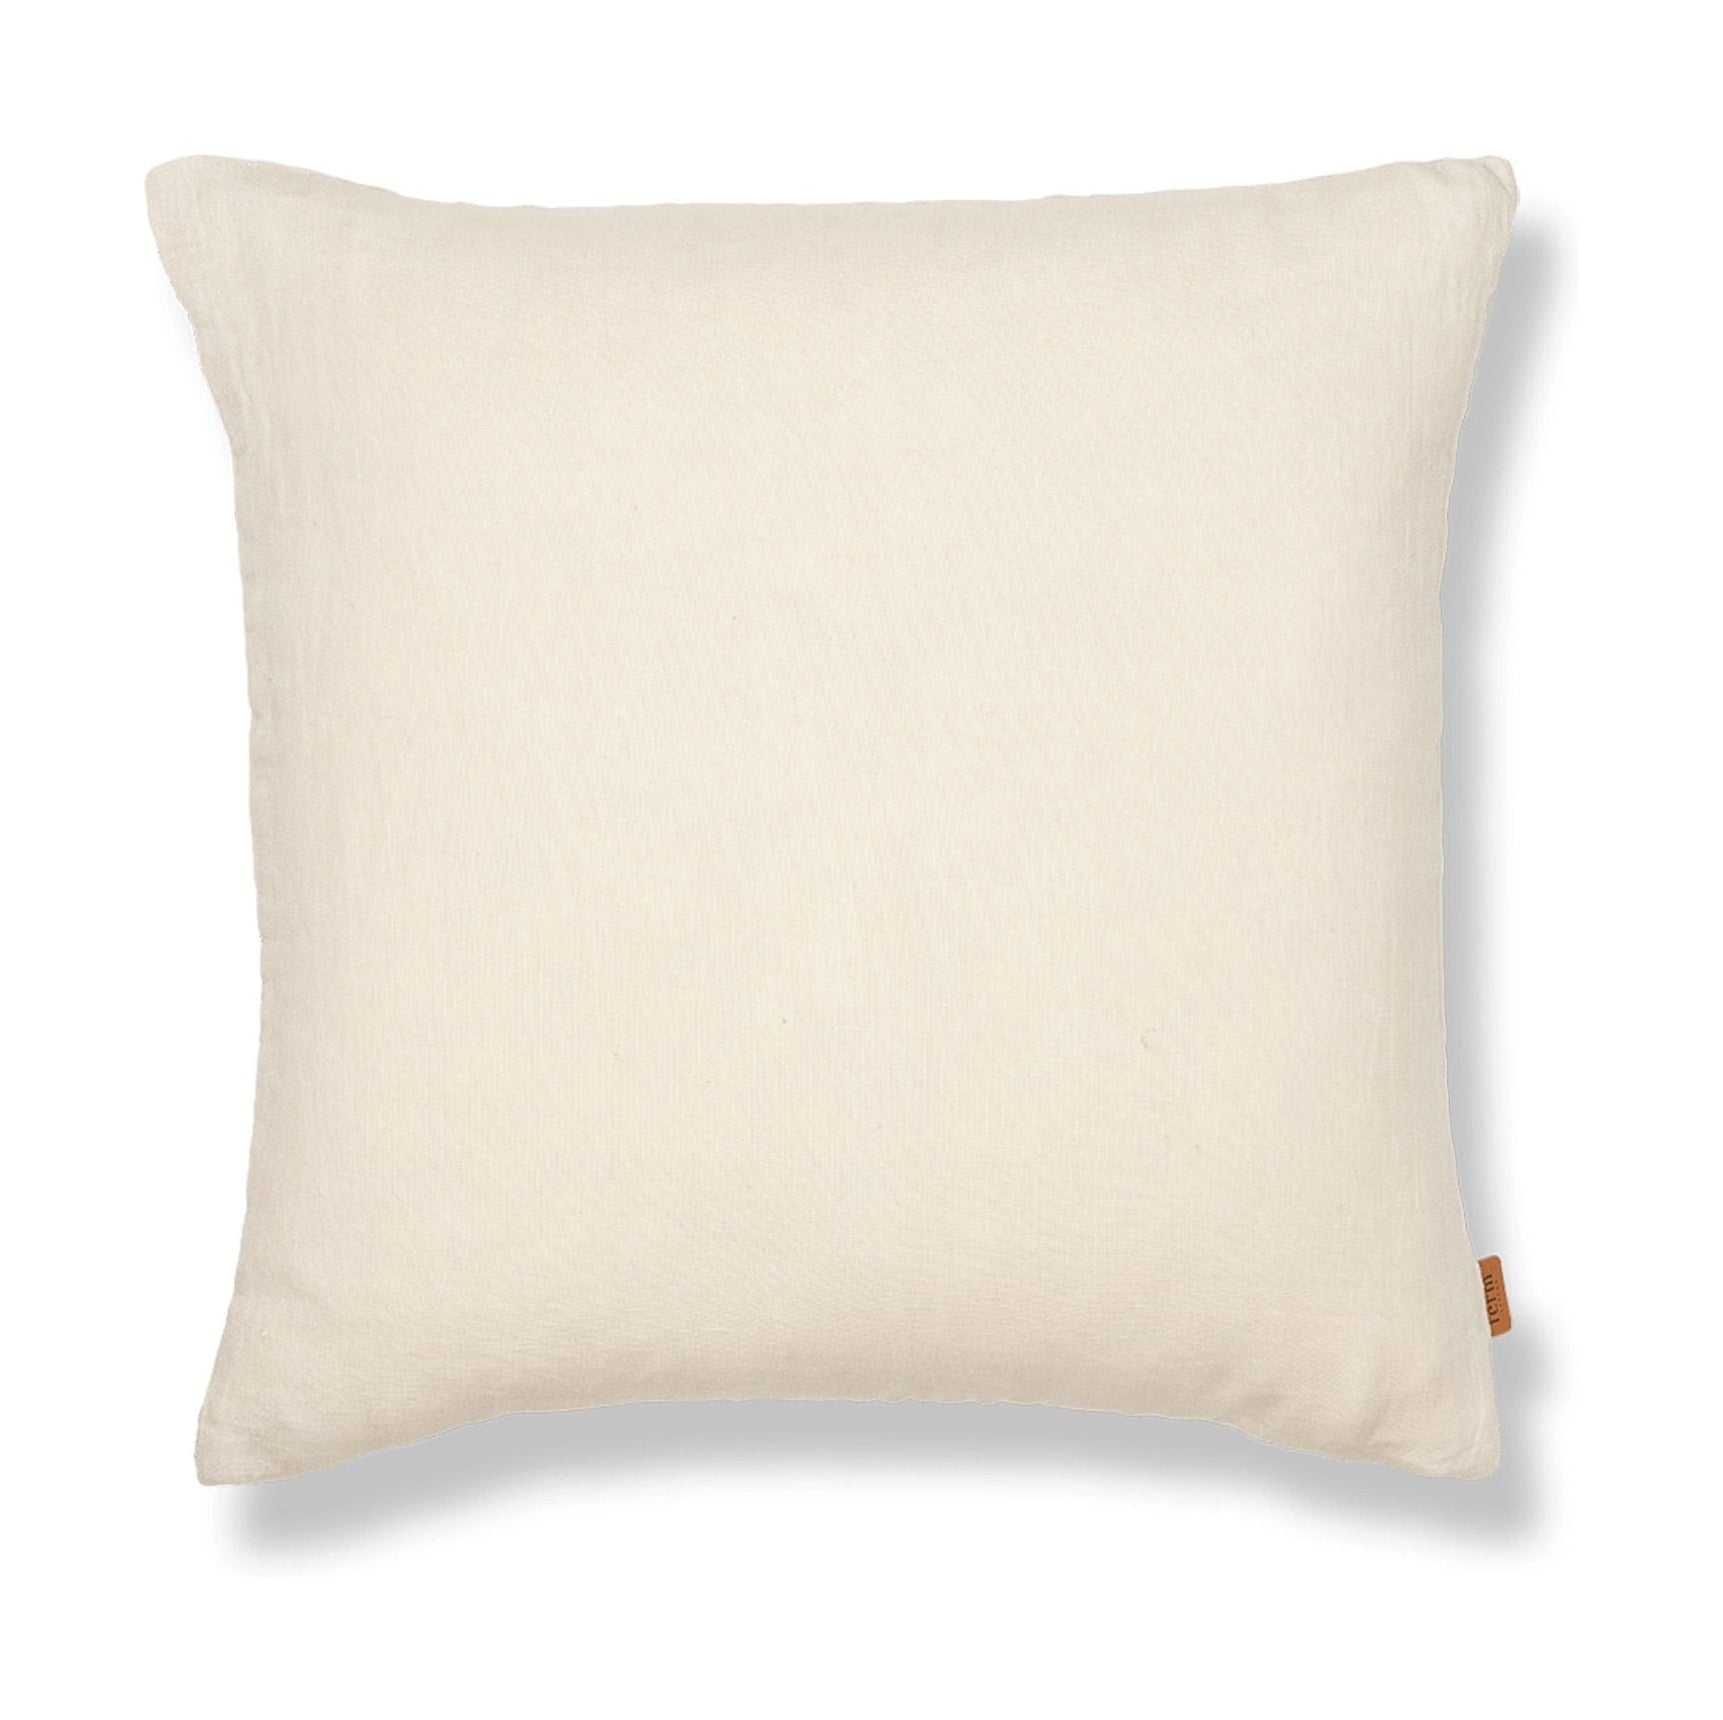 Ferm Living Linen Cushion Cover, Natural